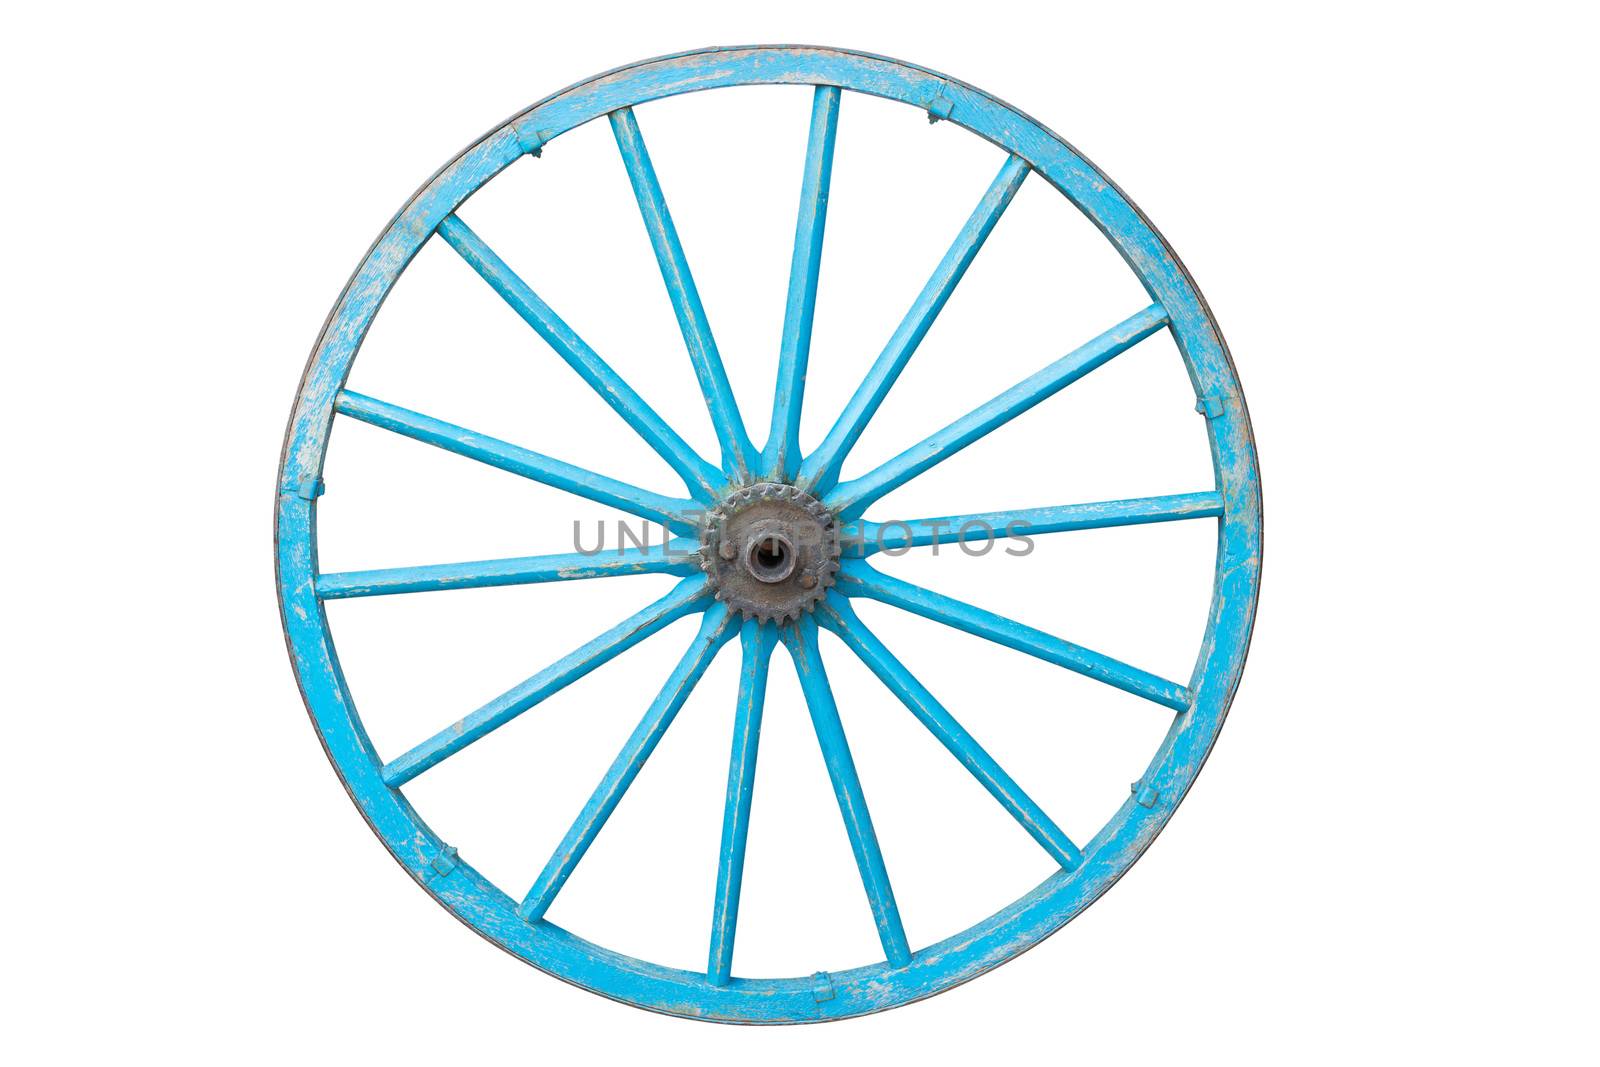 An old  blue wagon wheel by furzyk73